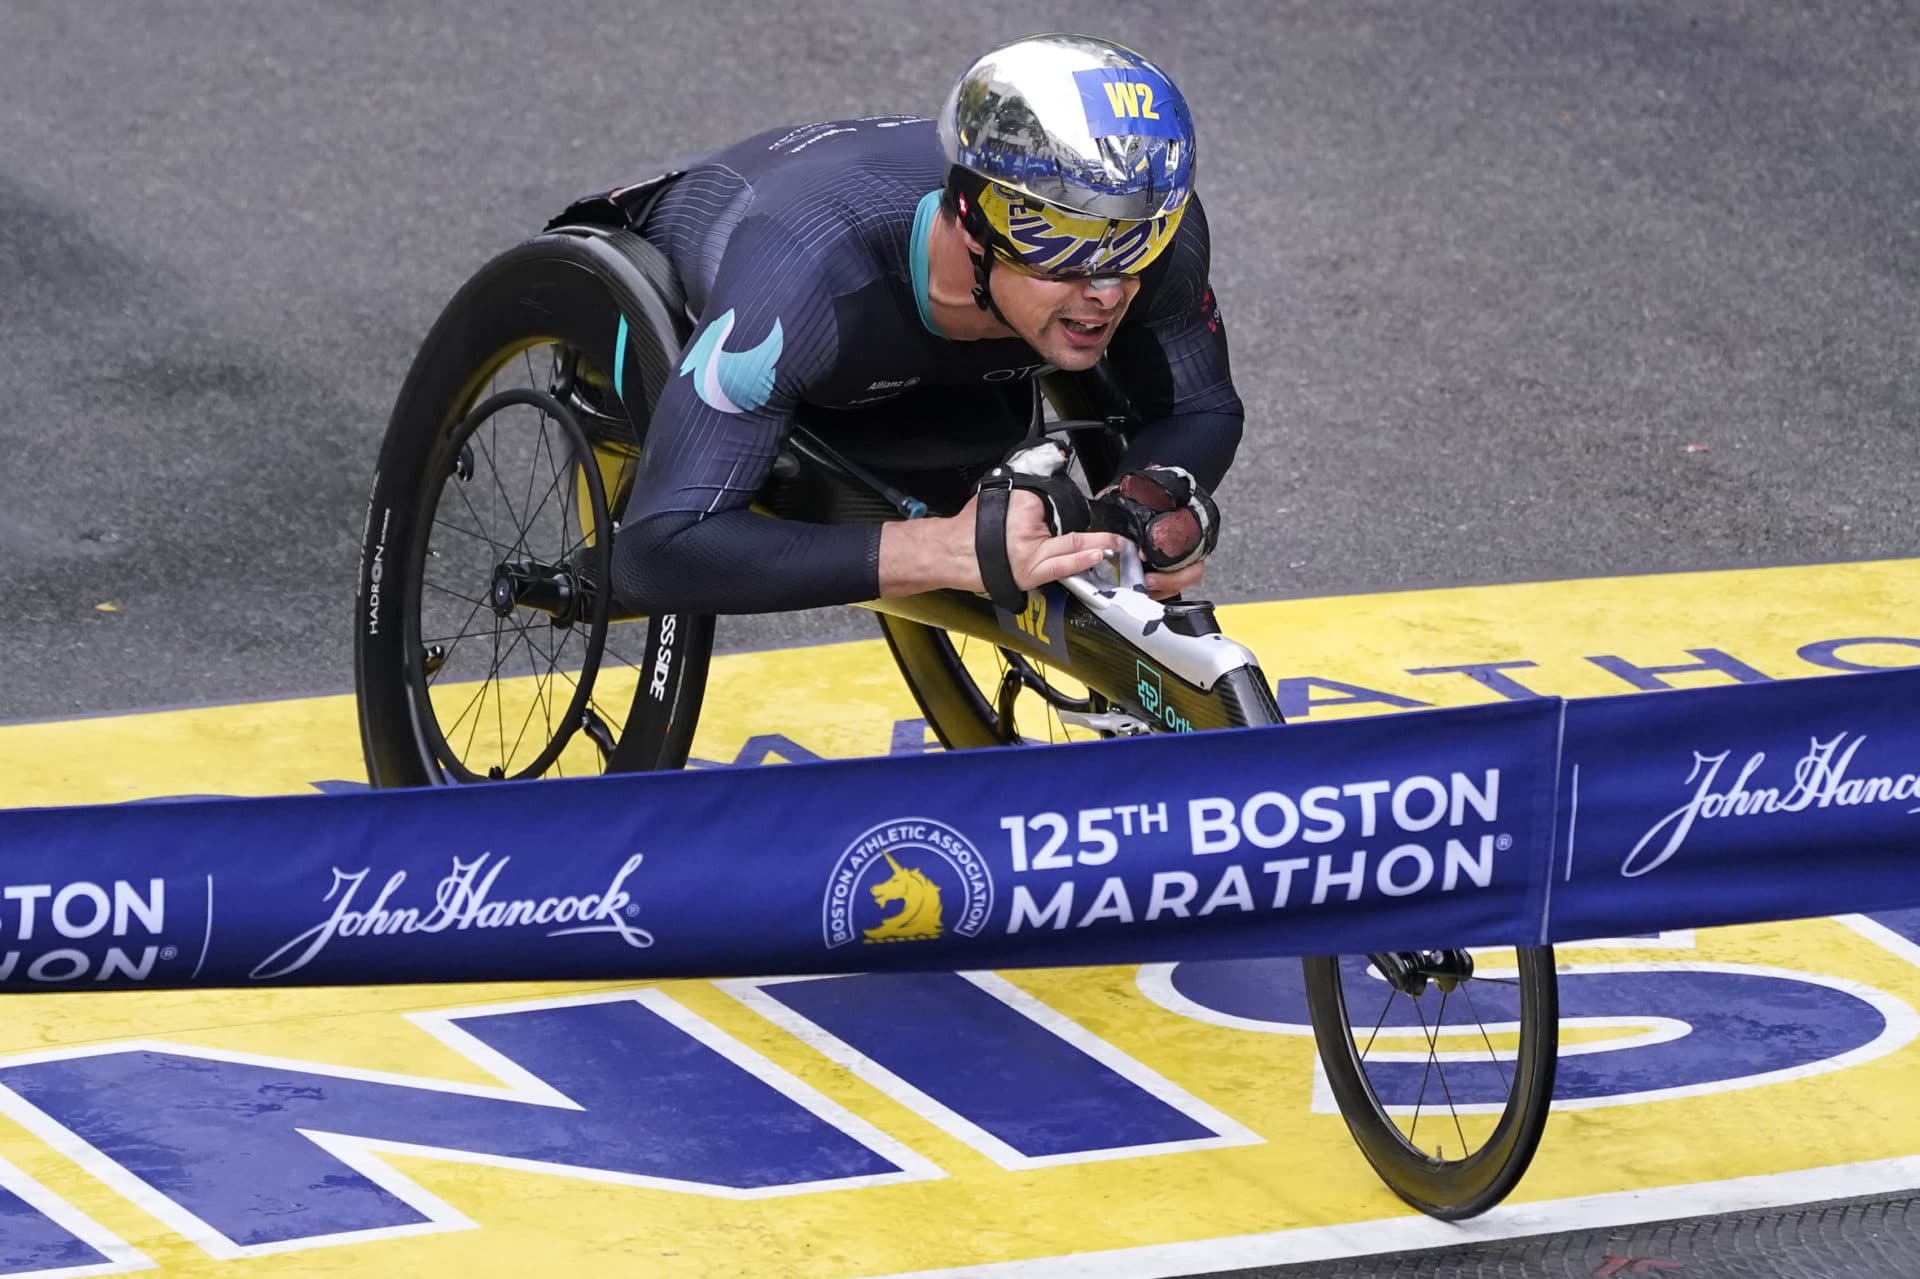 Marcel Hug, of Switzerland, rolls across the finish line to win the men's wheelchair division at the Boston Marathon in Boston, Monday, Oct. 11, 2021. (Charles Krupa/AP)